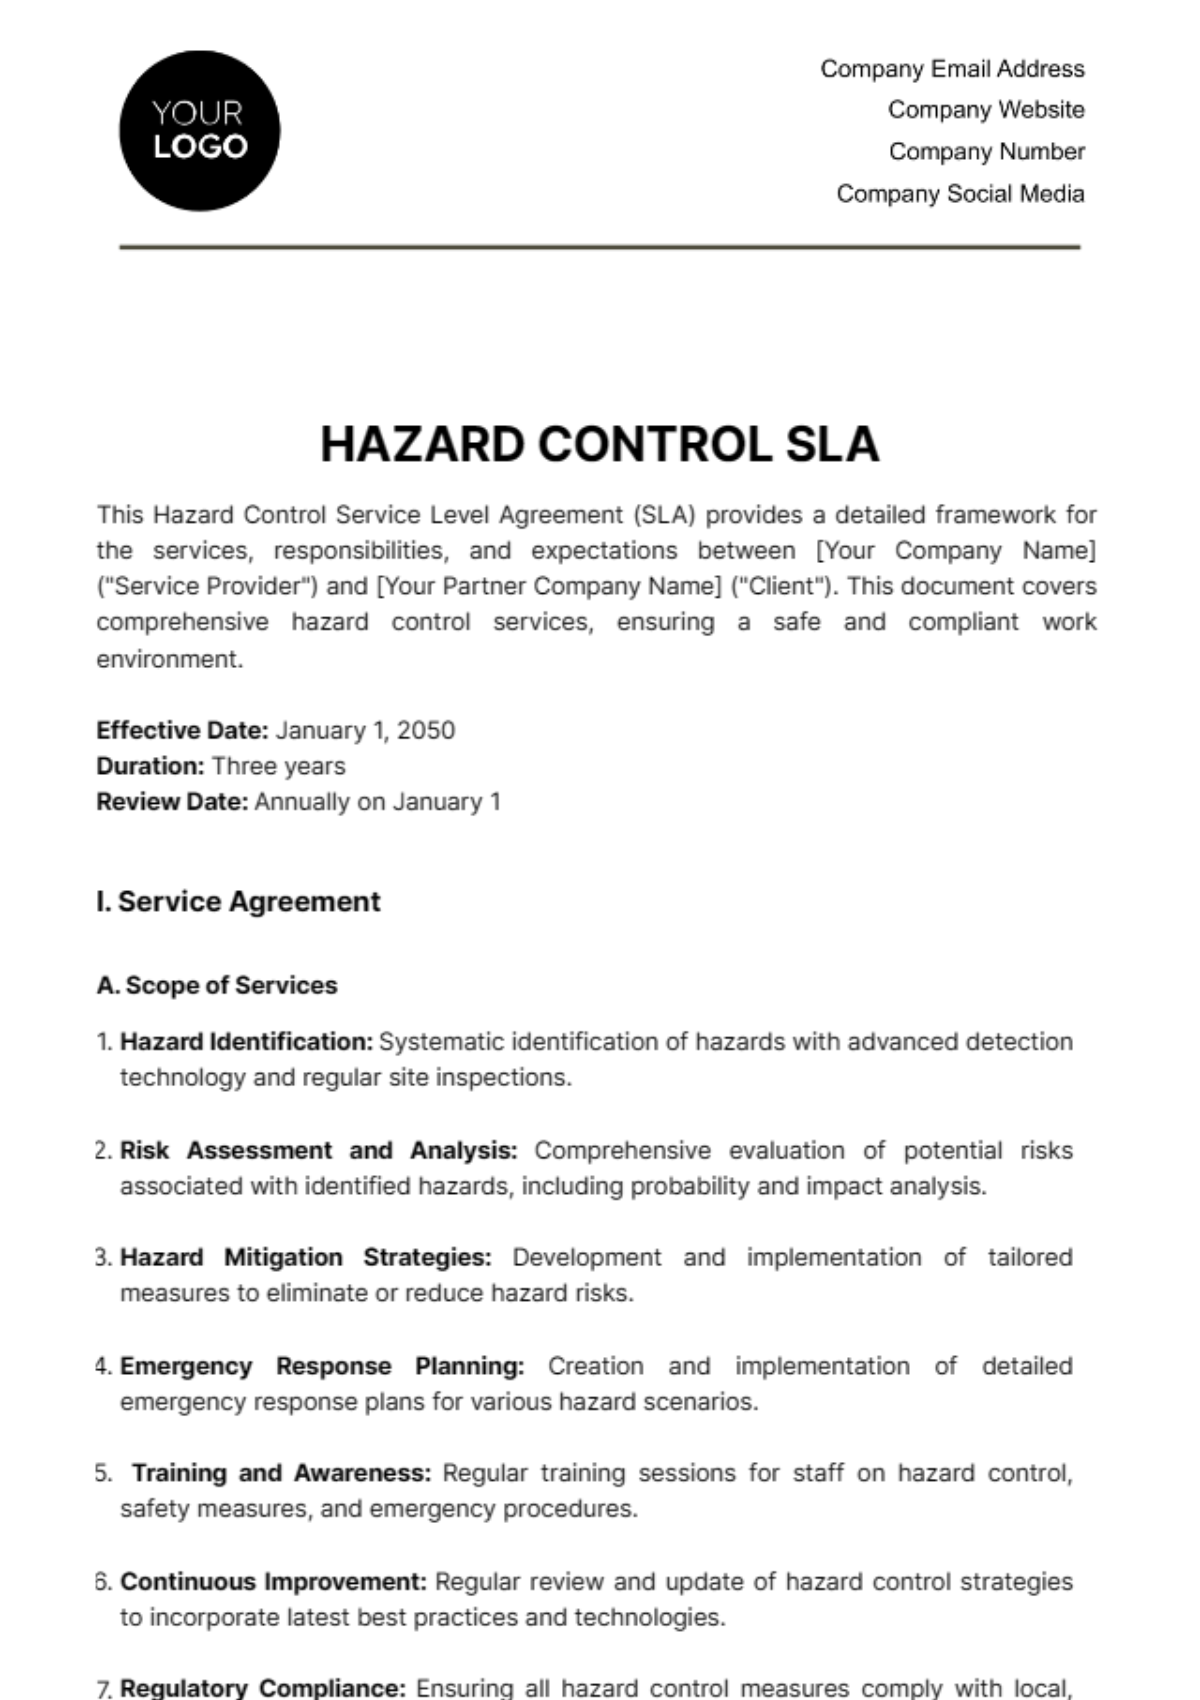 Hazard Control SLA Template